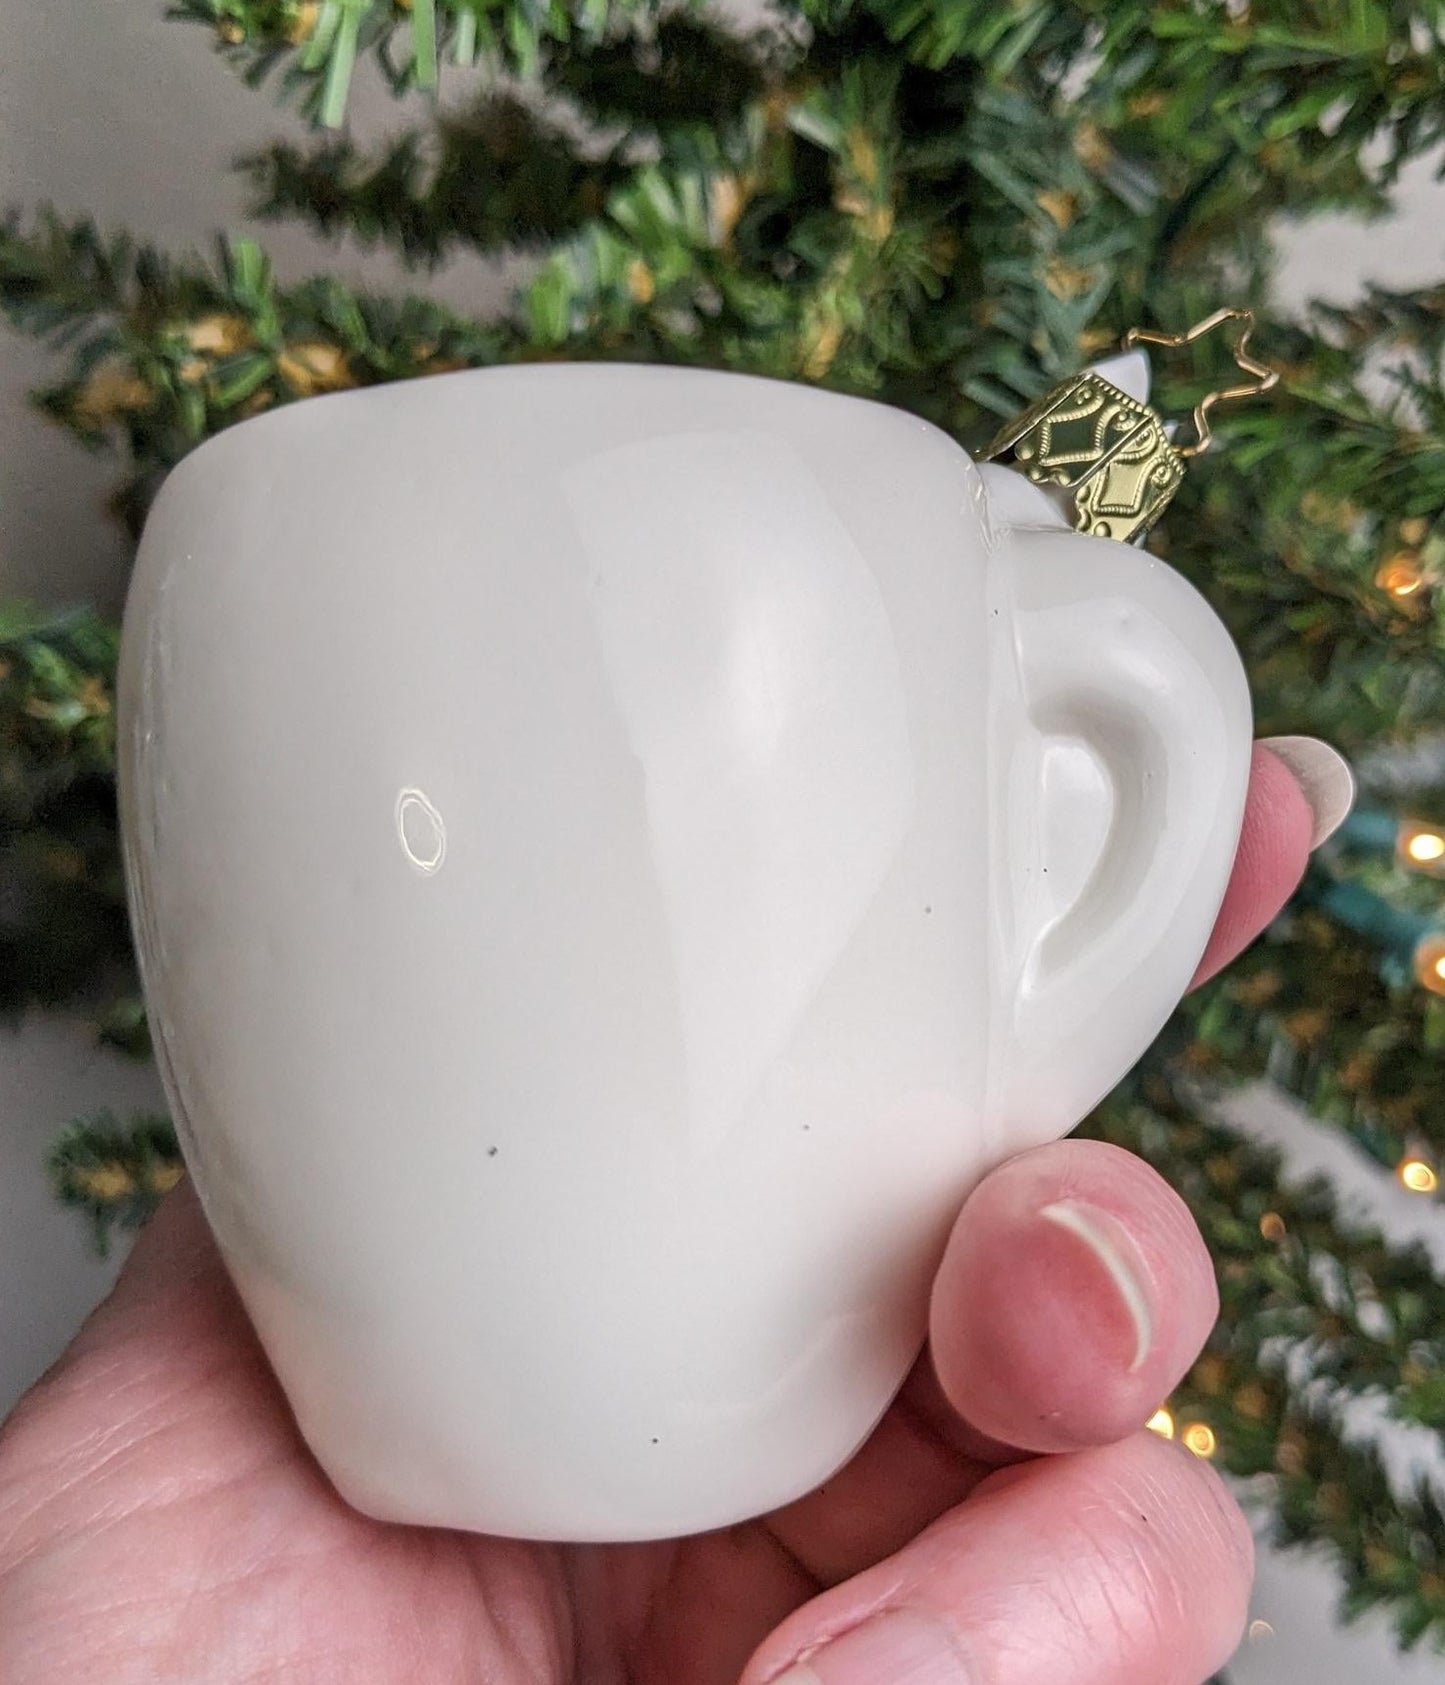 NEW 'Scent of Coffee' Guten Morgen Inge Glas Christmas Ornament